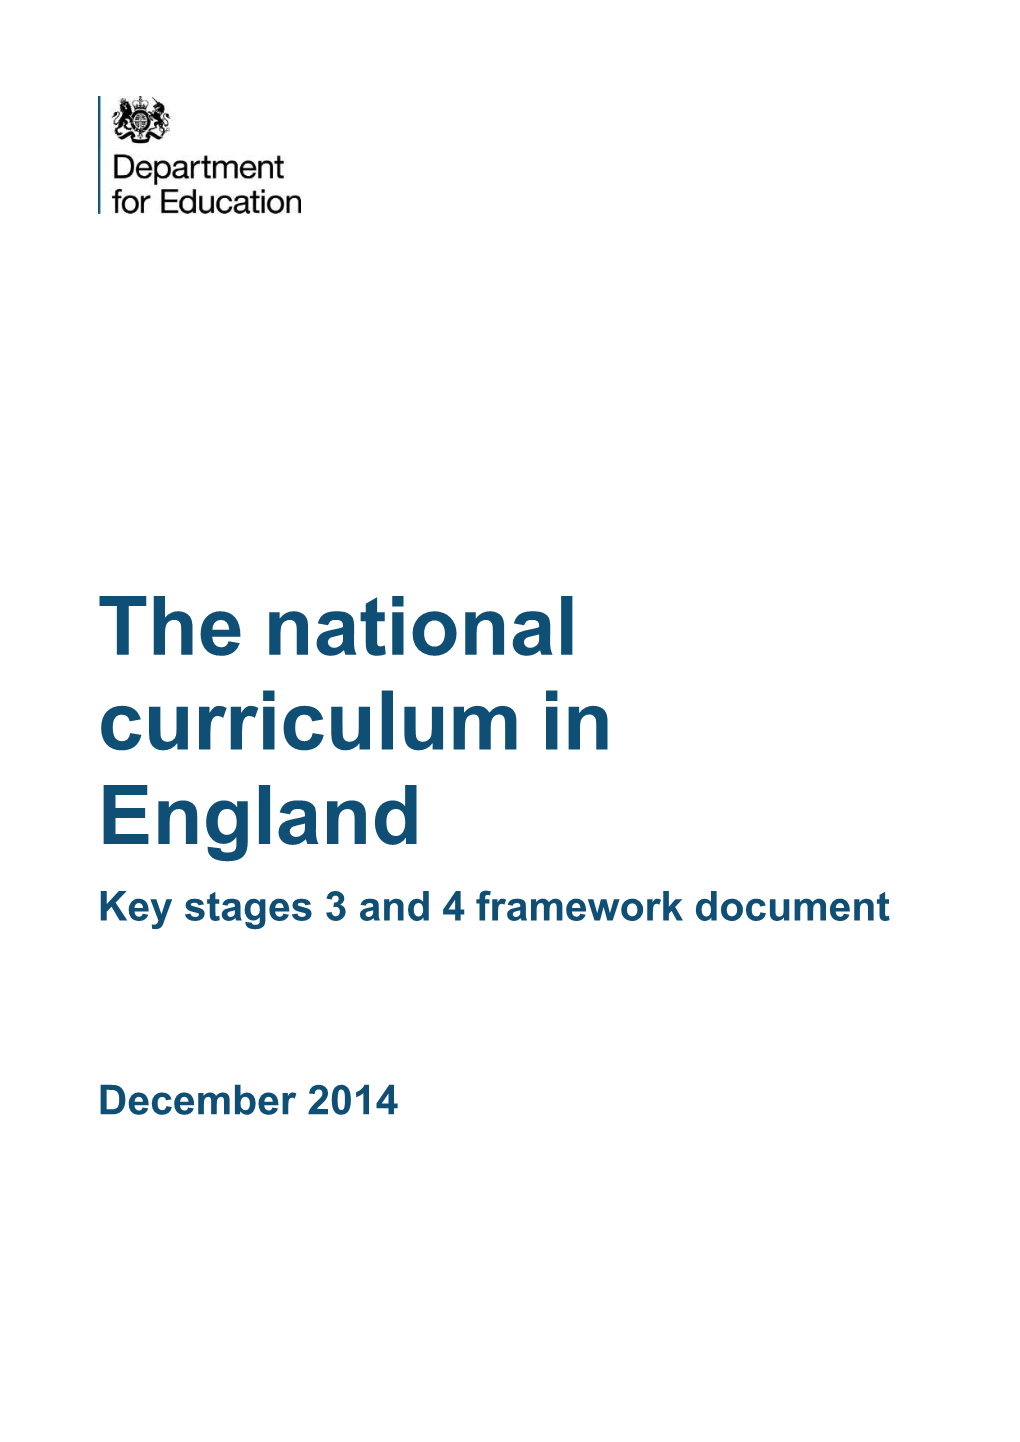 Secondary National Curriculum for England